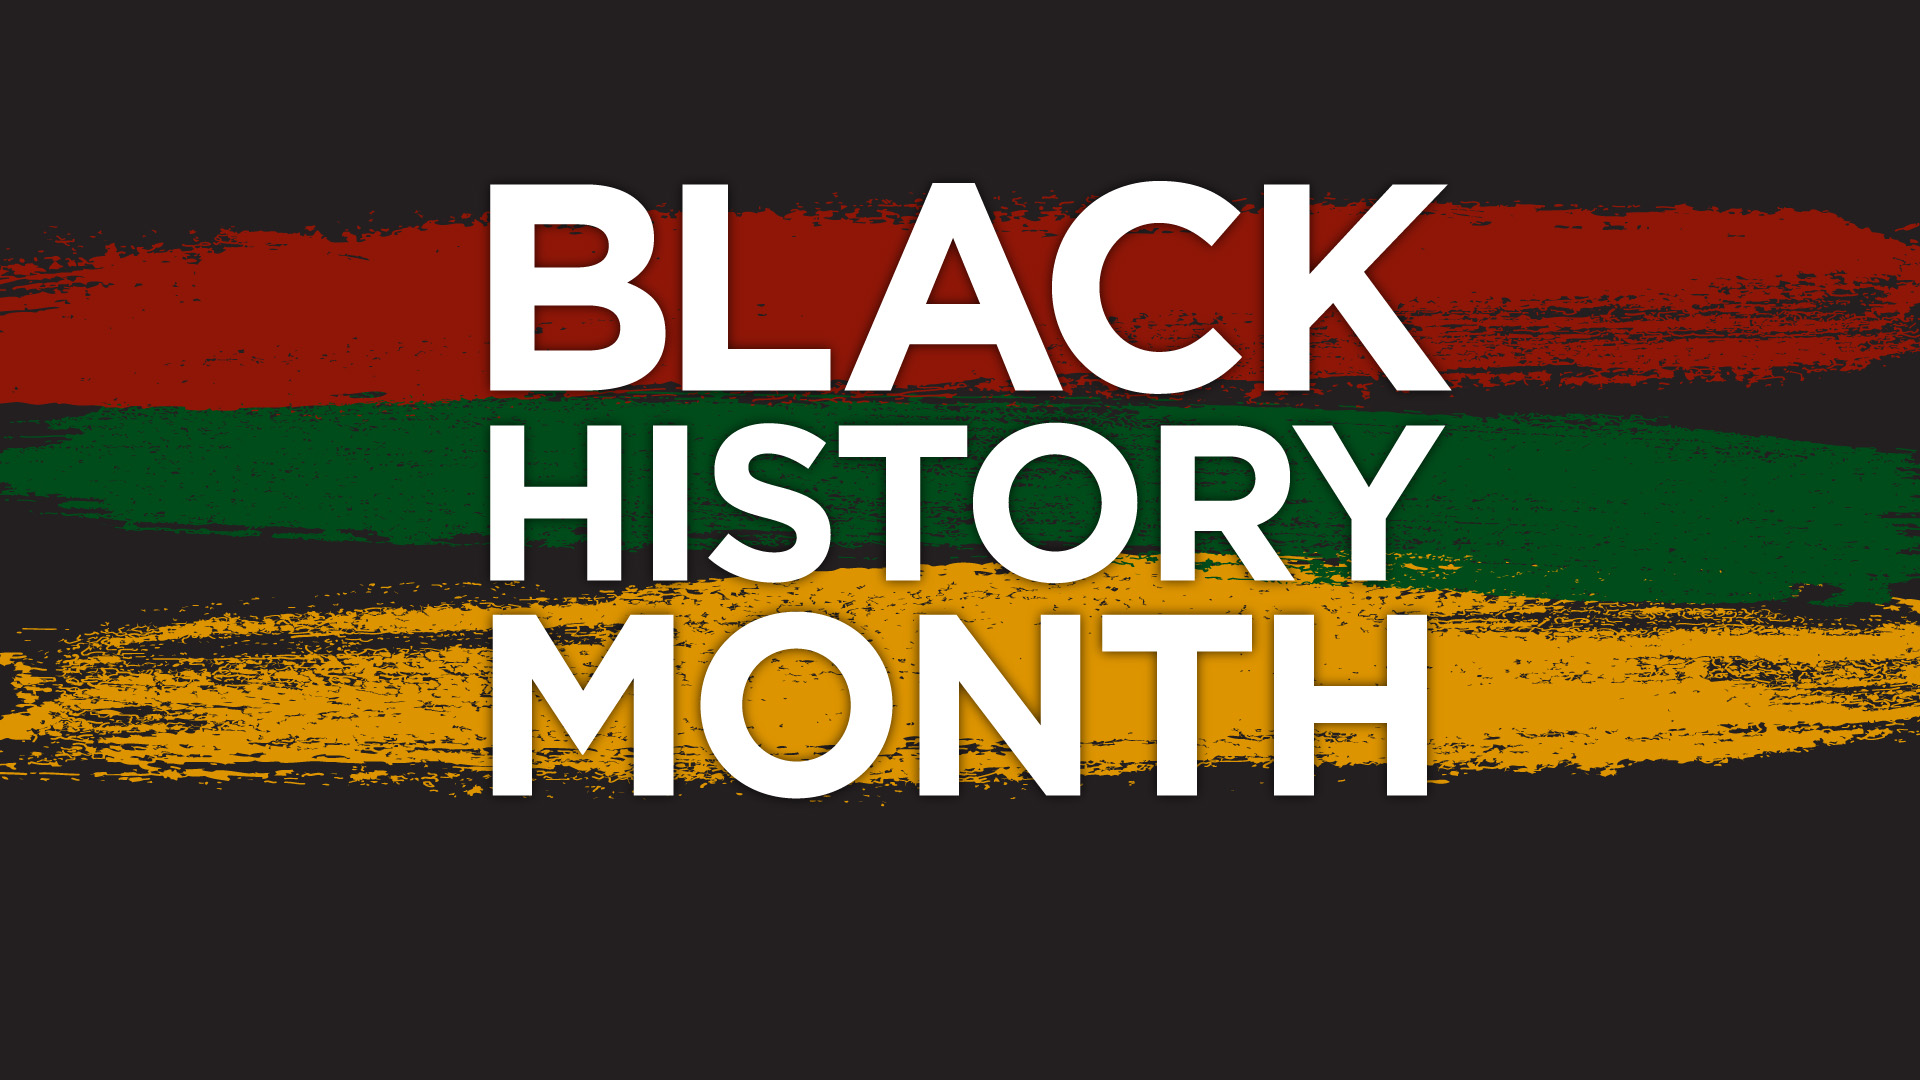 Albany Black History Exhibit Am 7fm News Talk Whcu870